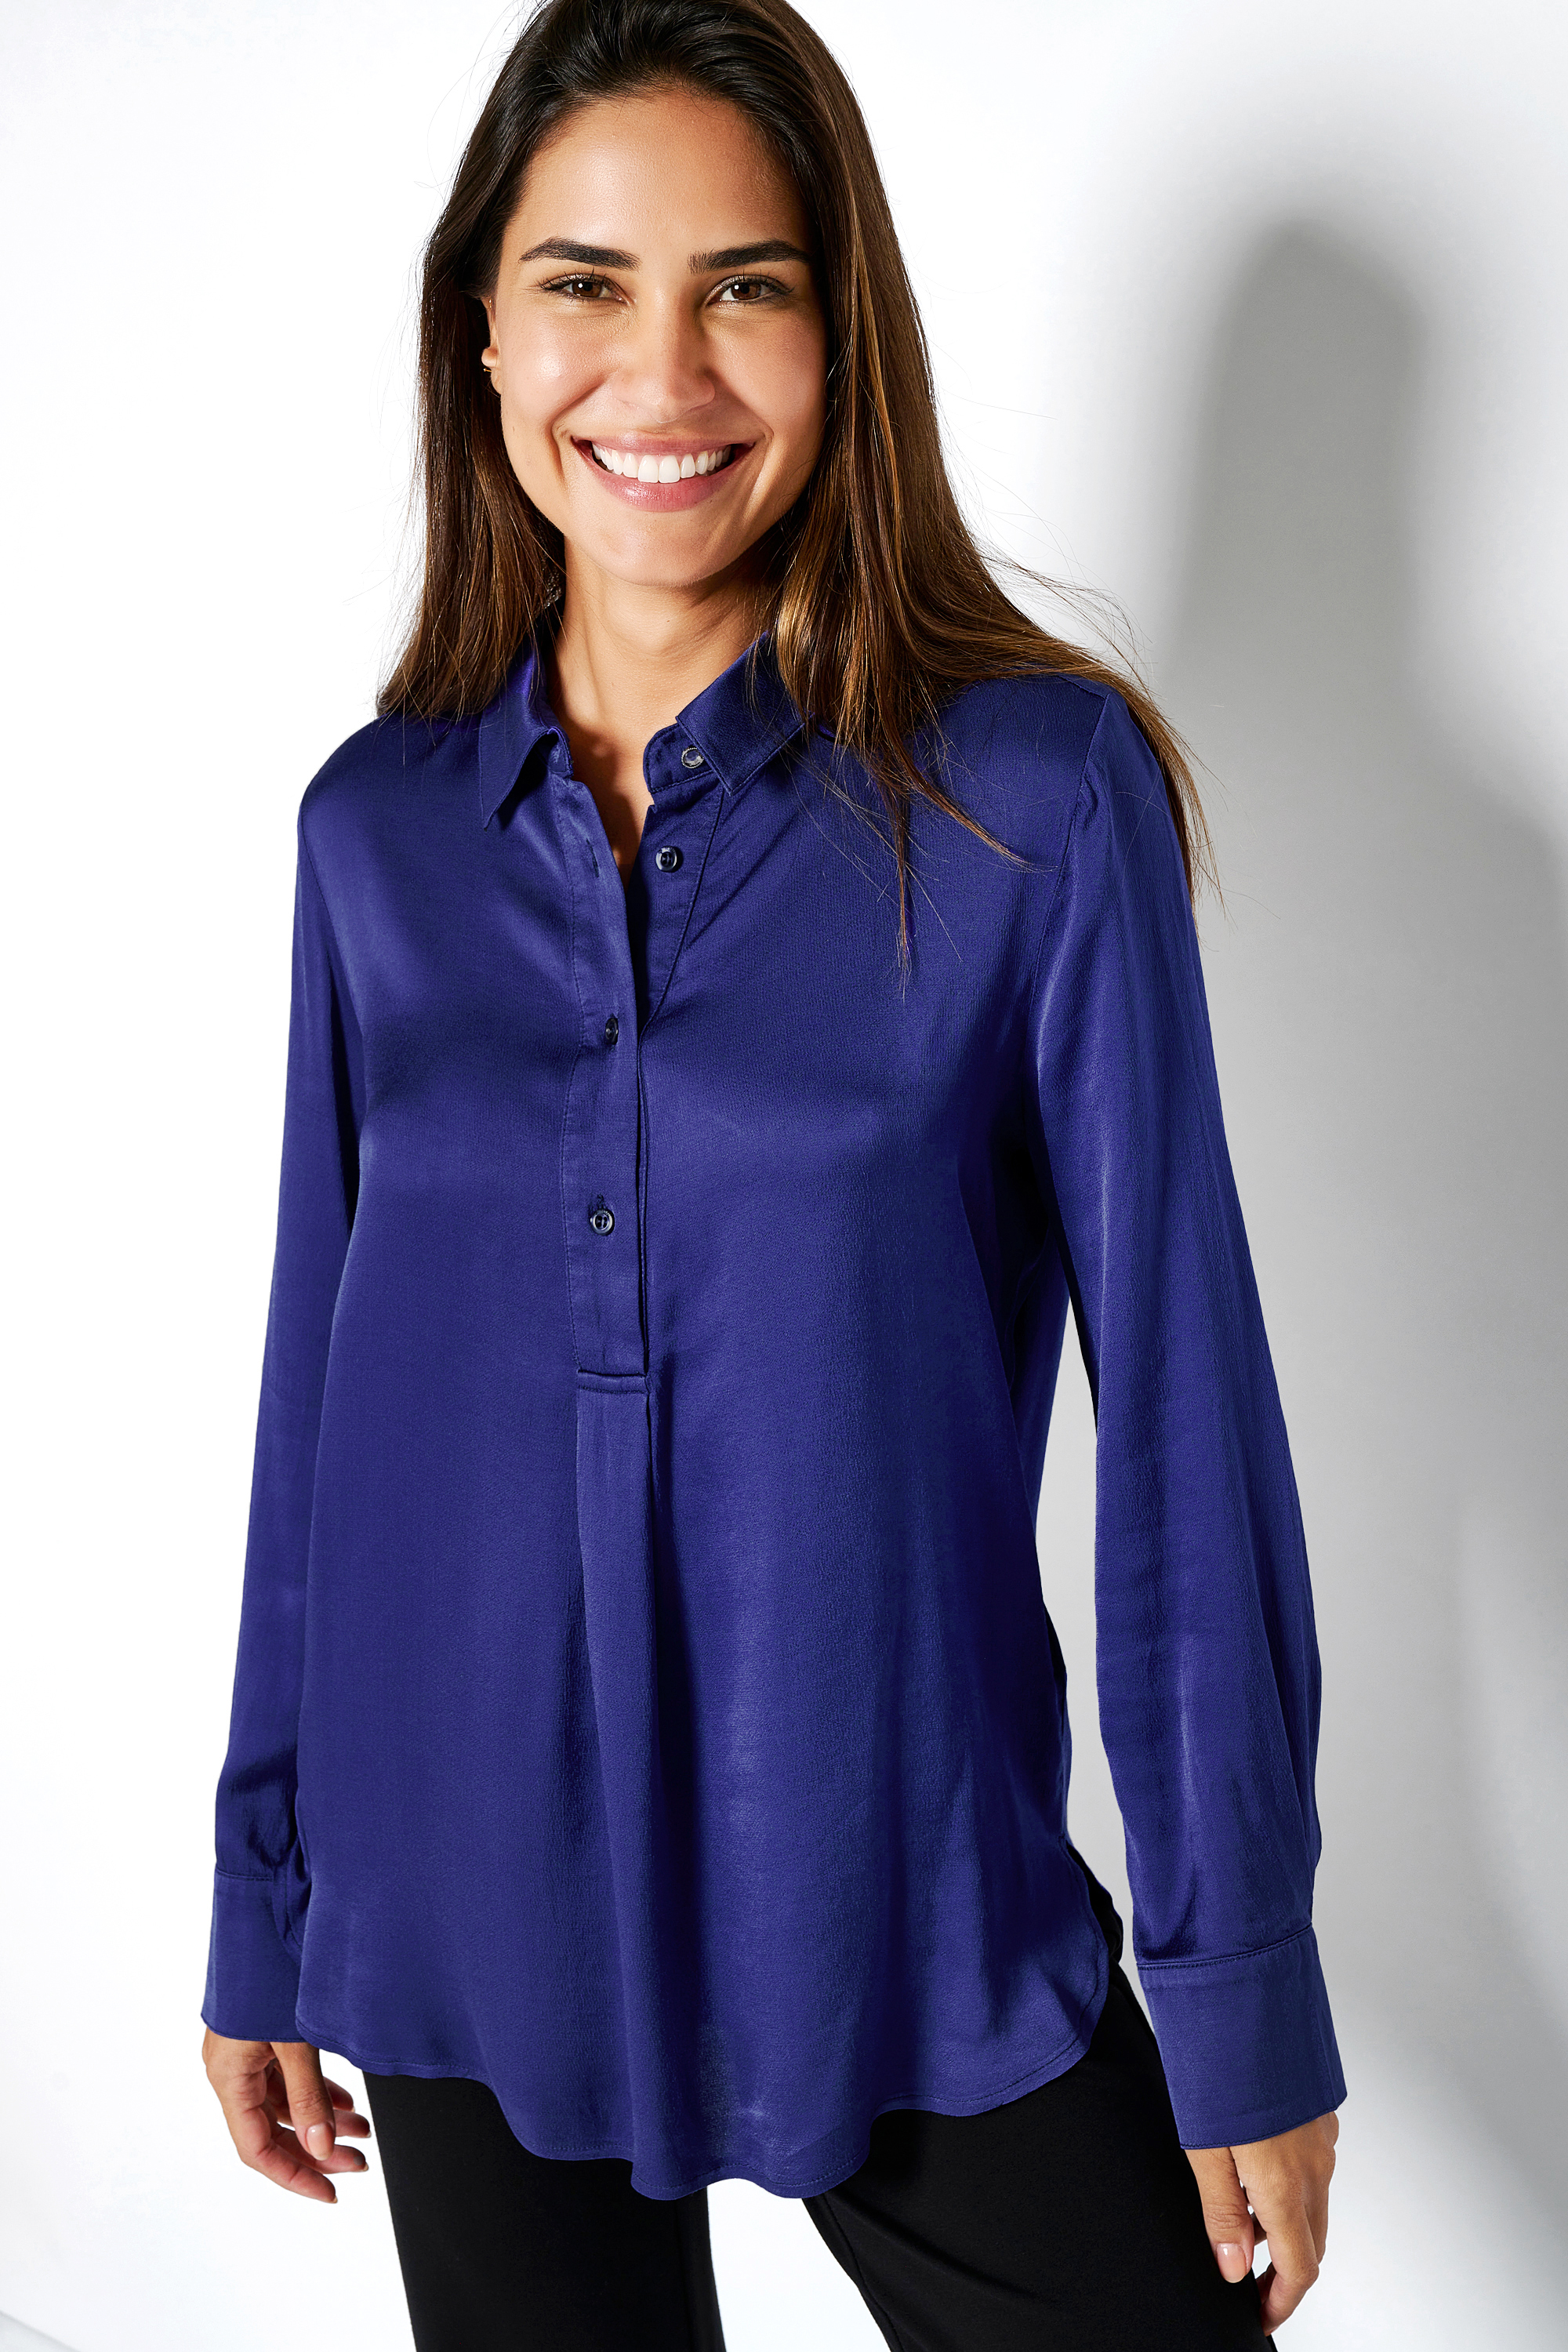 Long sleeve blouse made of satin | Style »Celina« dark blue